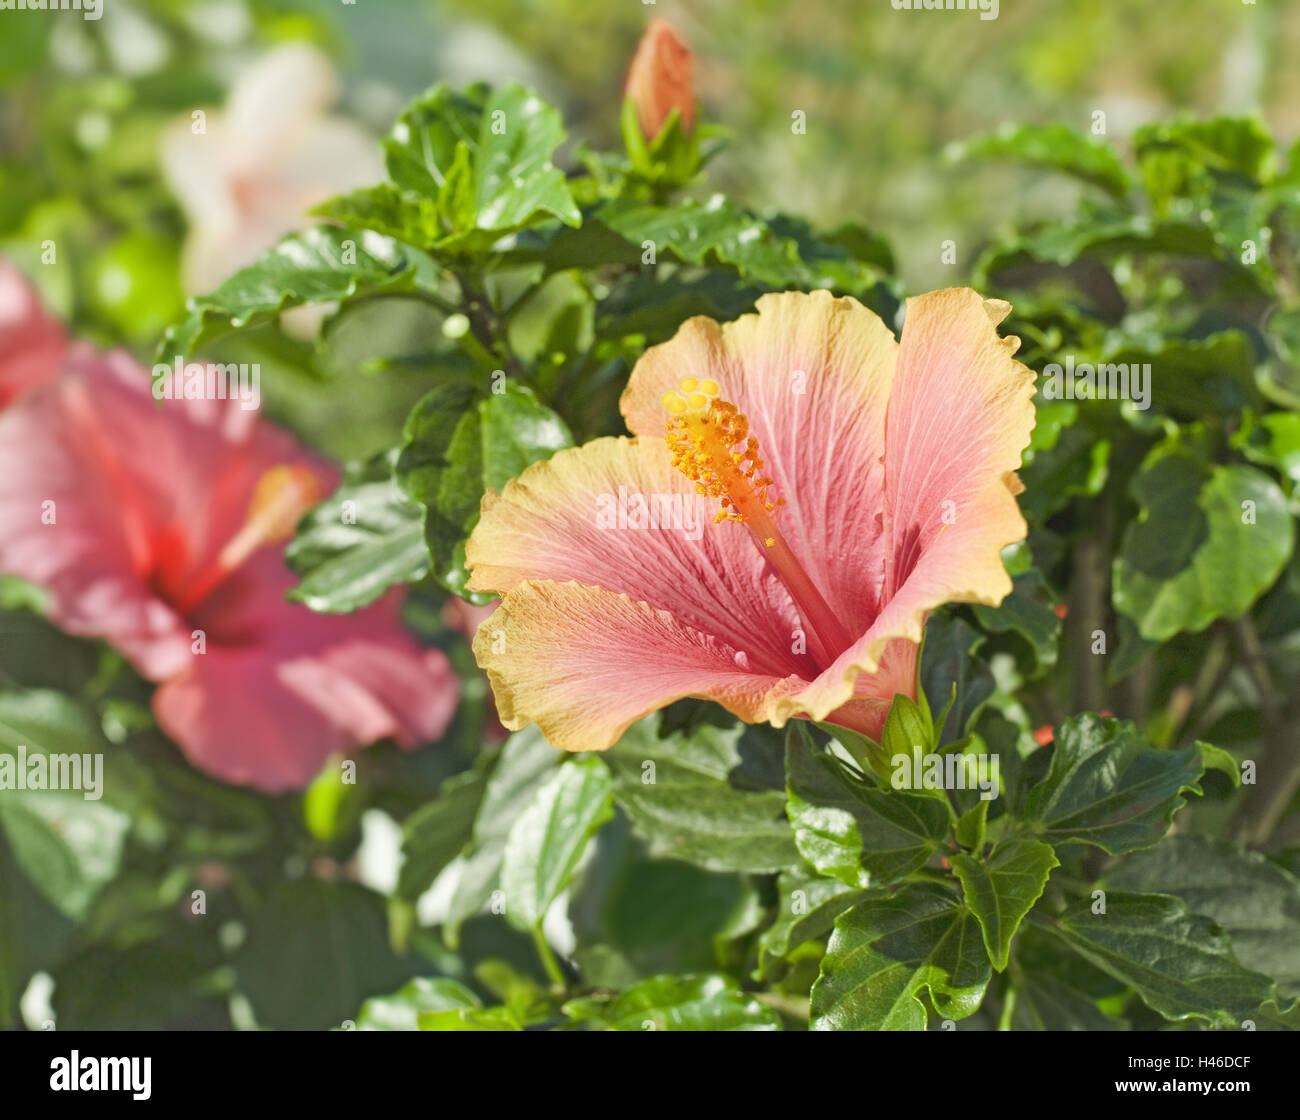 Hibiscus, Hibiscus boryanus, marsh mallow, mallow plant, Stock Photo